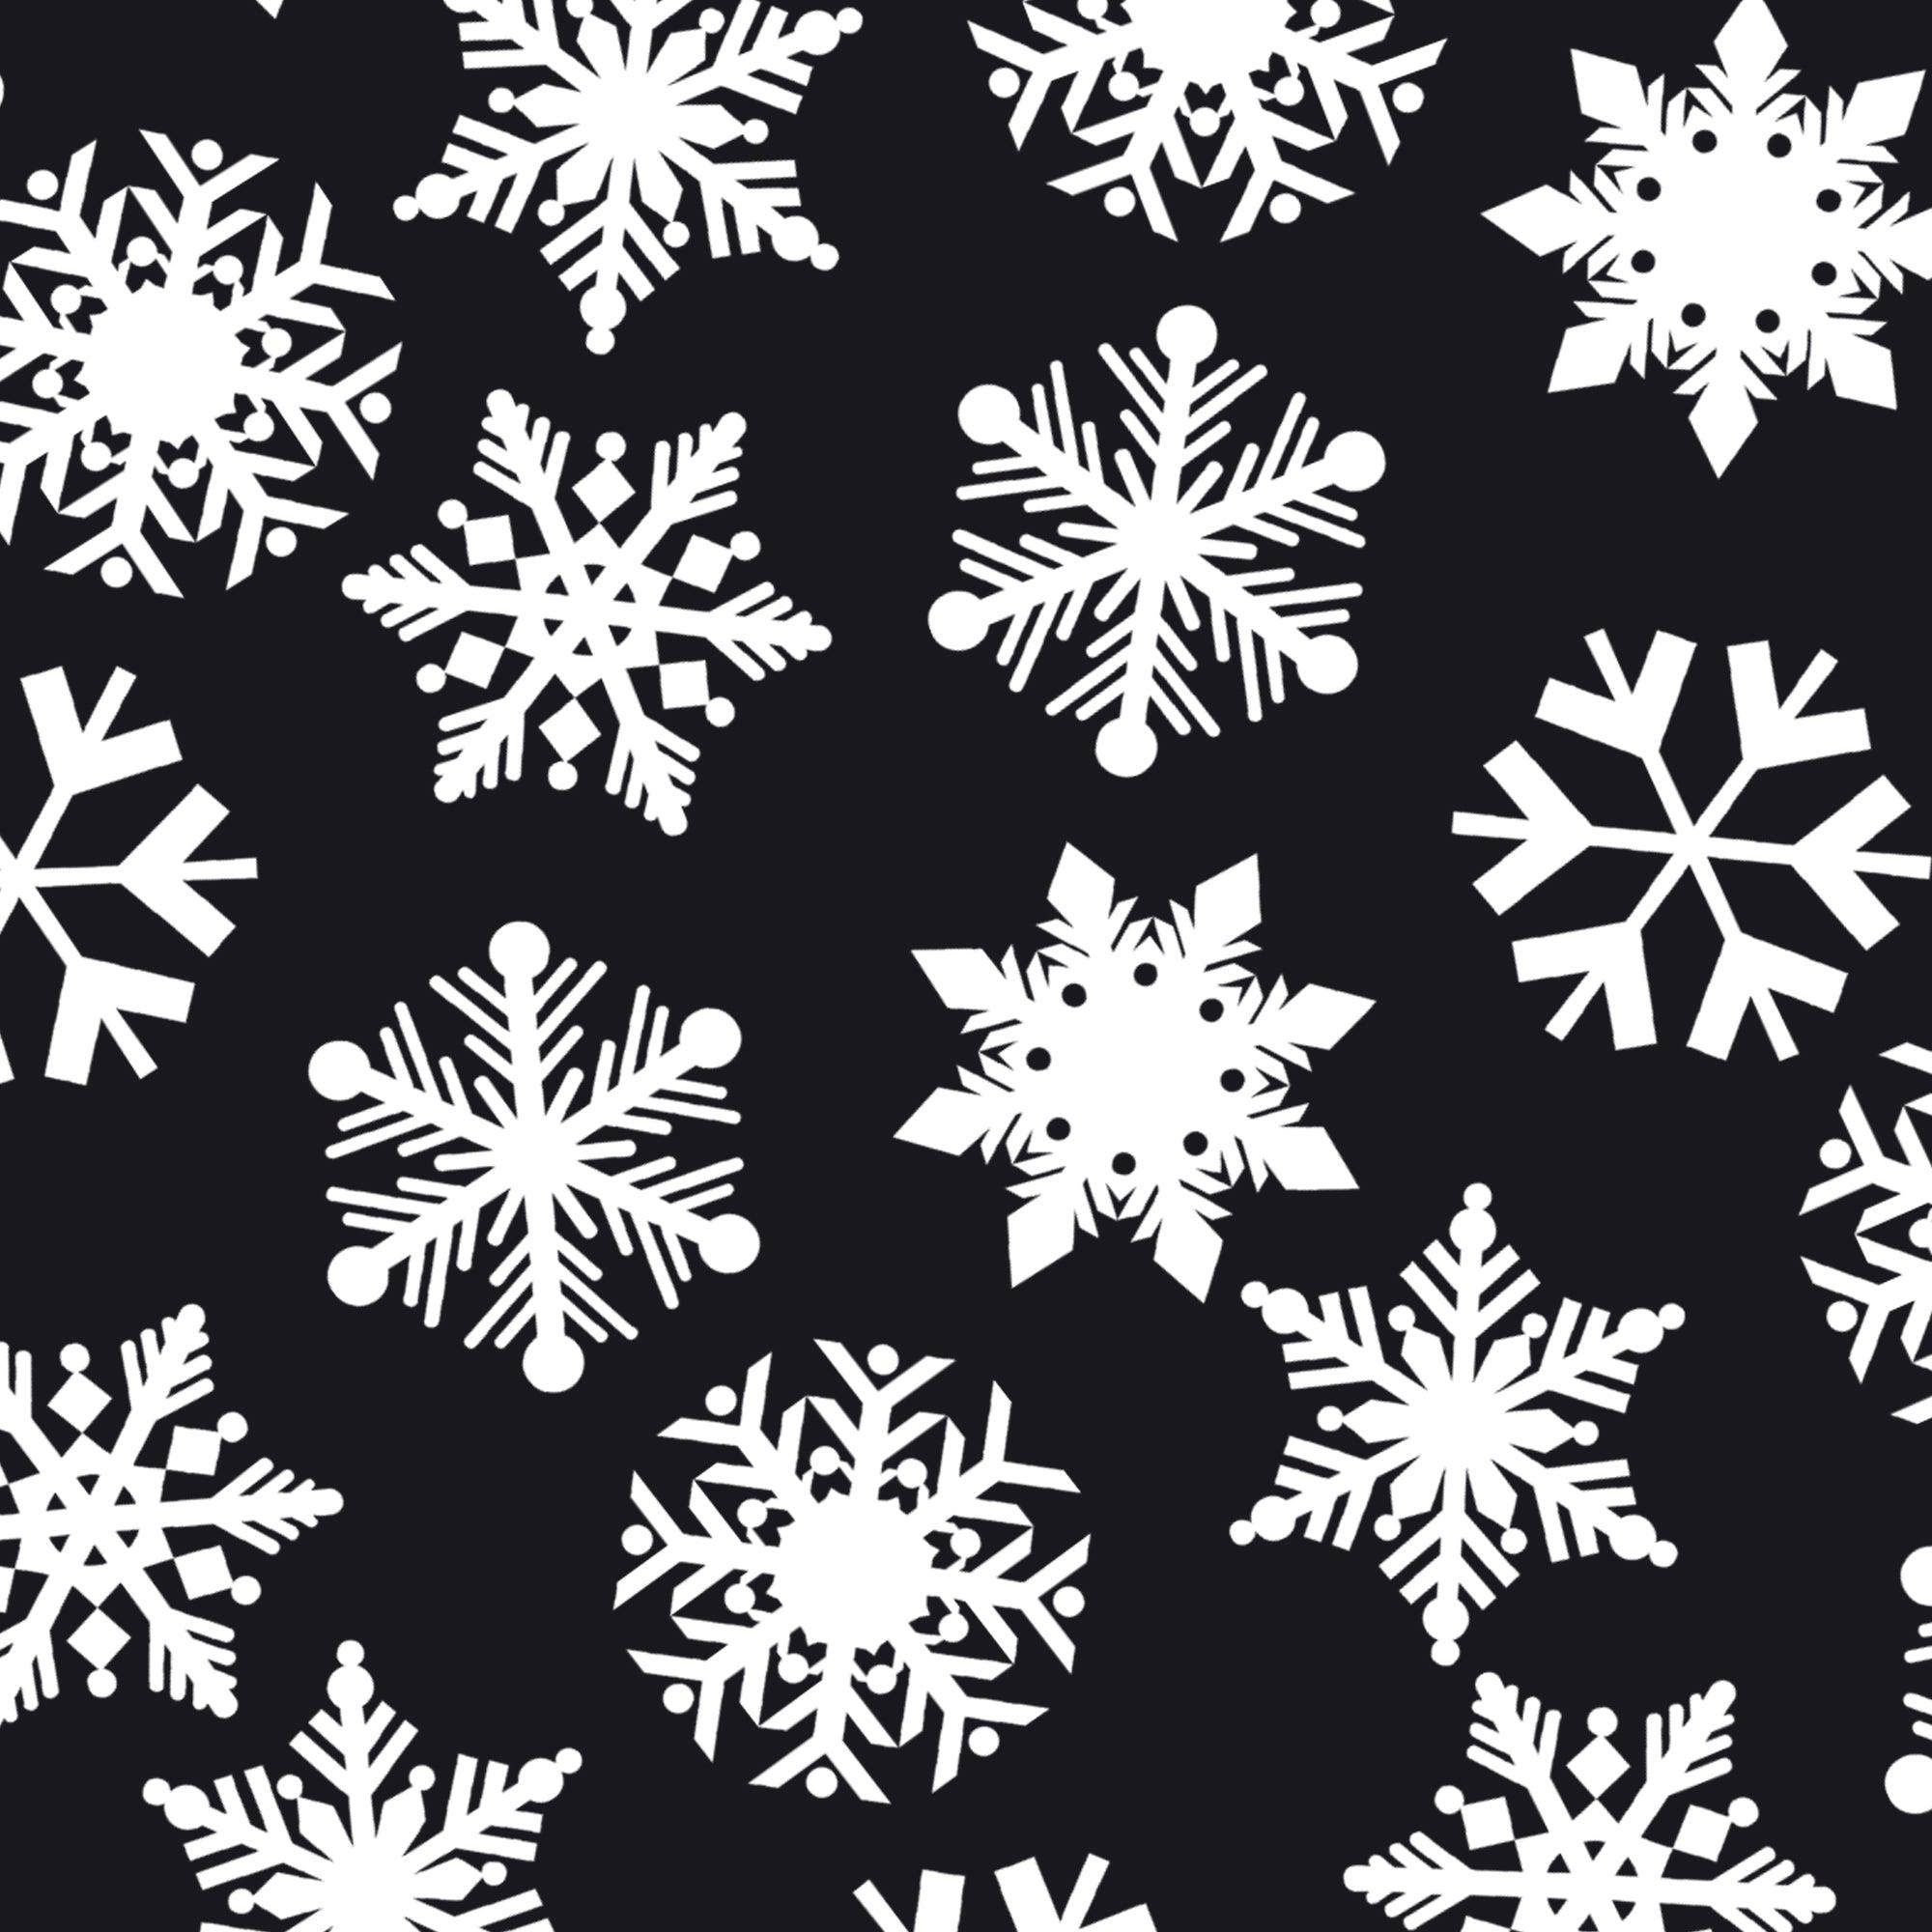 Snowflake Window Stickers: Pack 2 (48 snowflakes @ approx 100mm diameter) Christmas Window Display